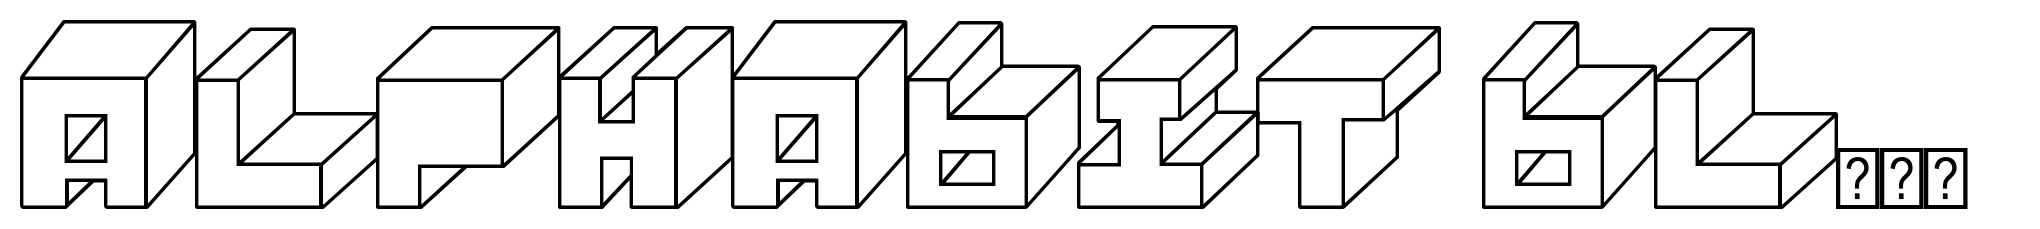 Alphabit Blocks image